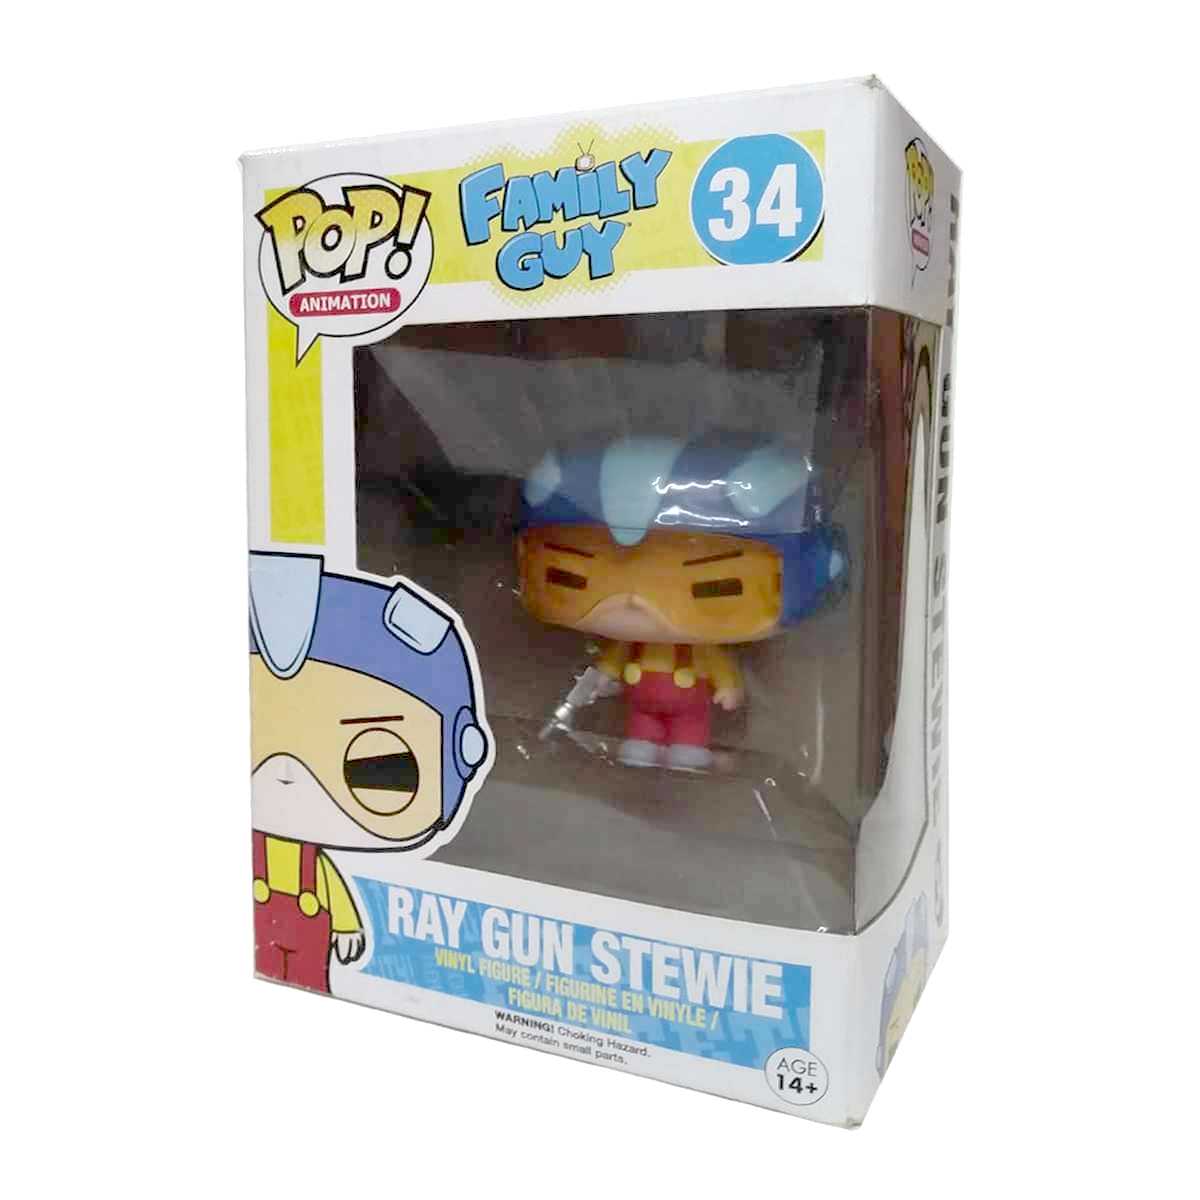 Funko Pop! Animation Family Guy Ray Gun Stewie vinyl figure número 34 Vaulted